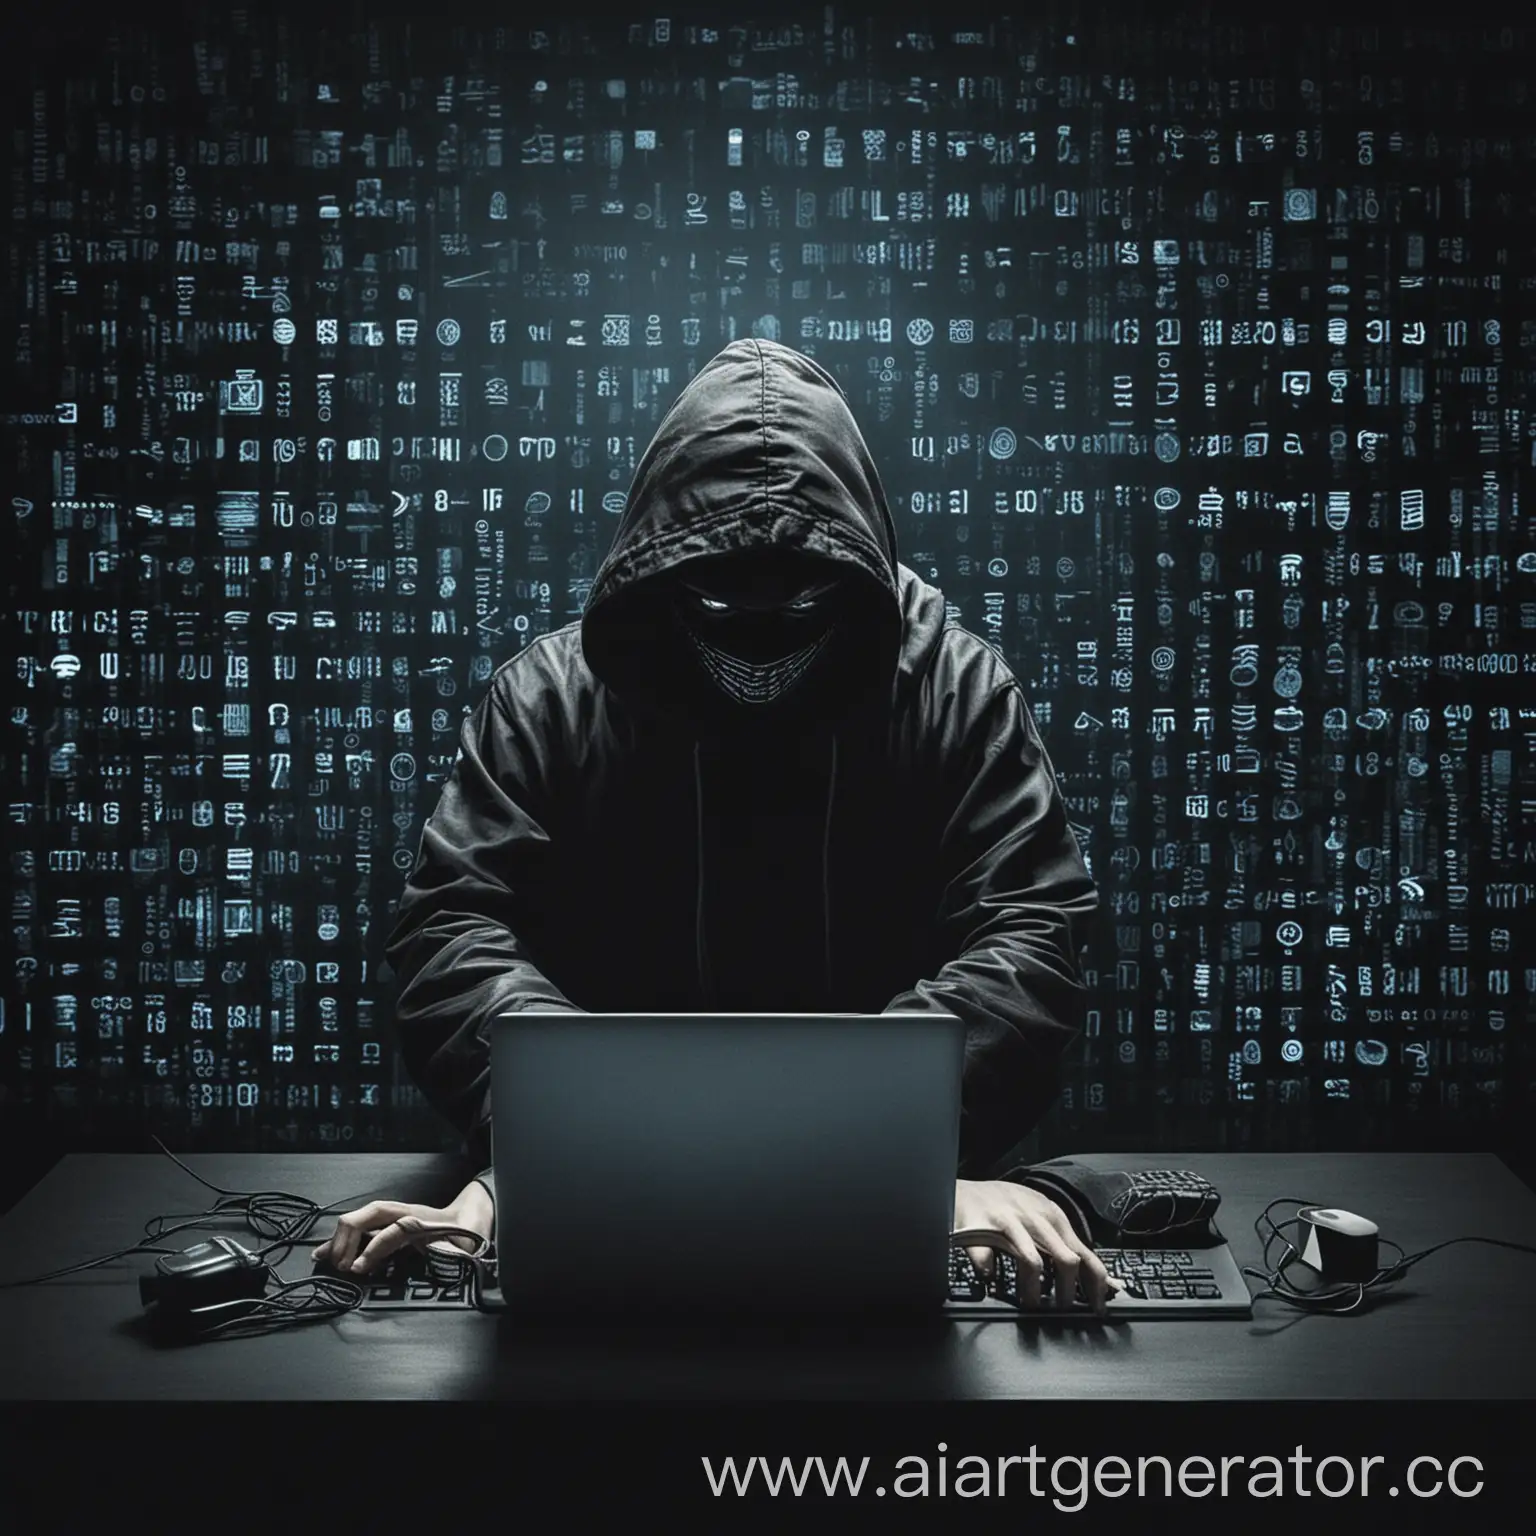 Digital-Surveillance-Detectives-Tracking-Cybercriminal-Activity